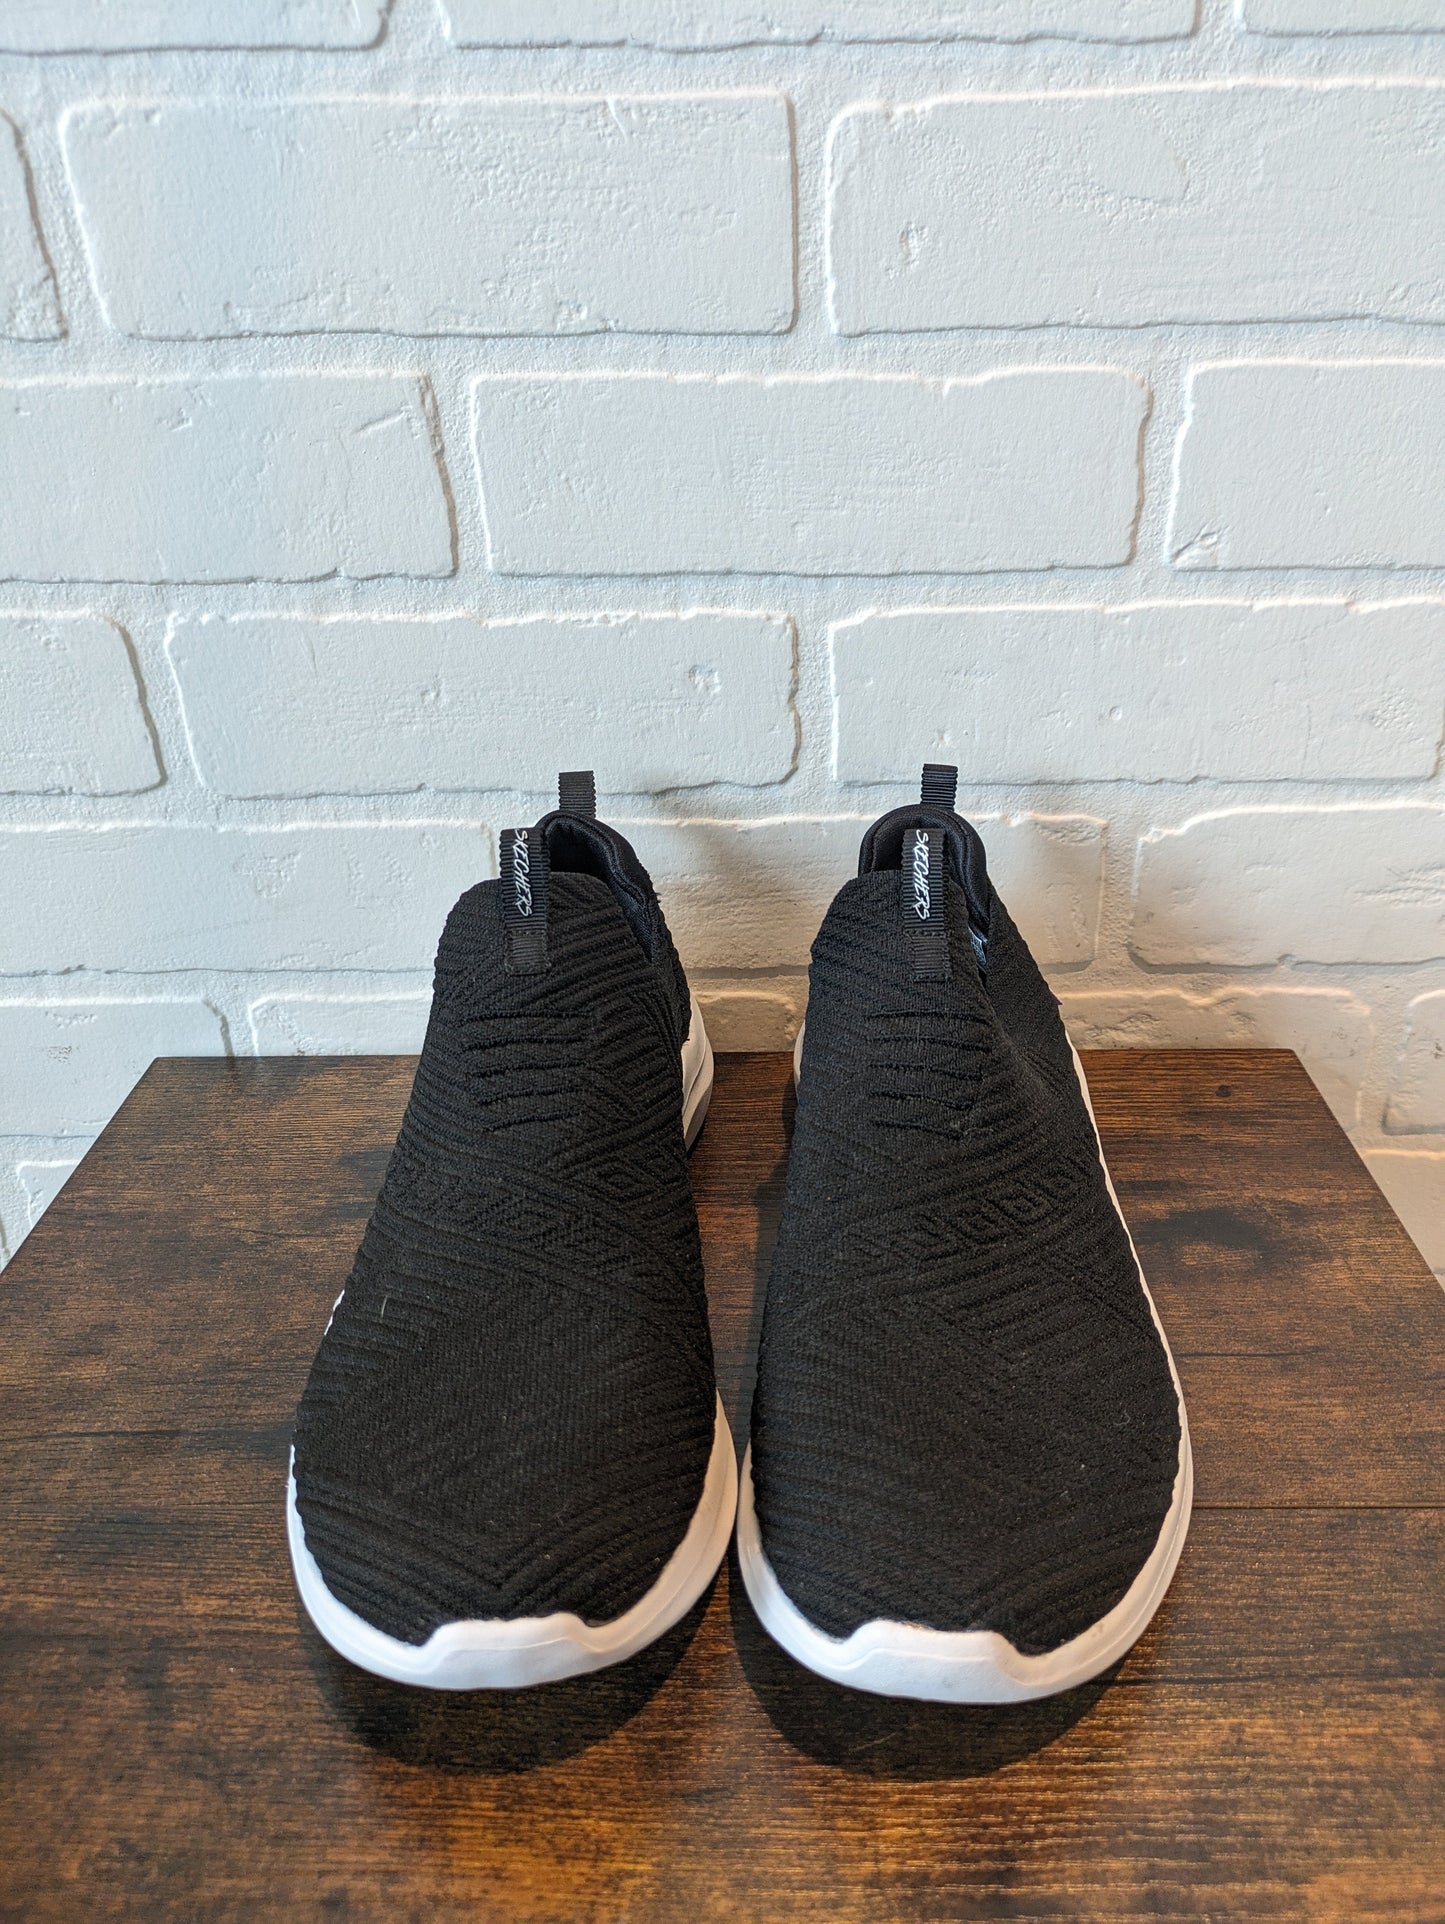 Black Shoes Athletic Skechers, Size 8